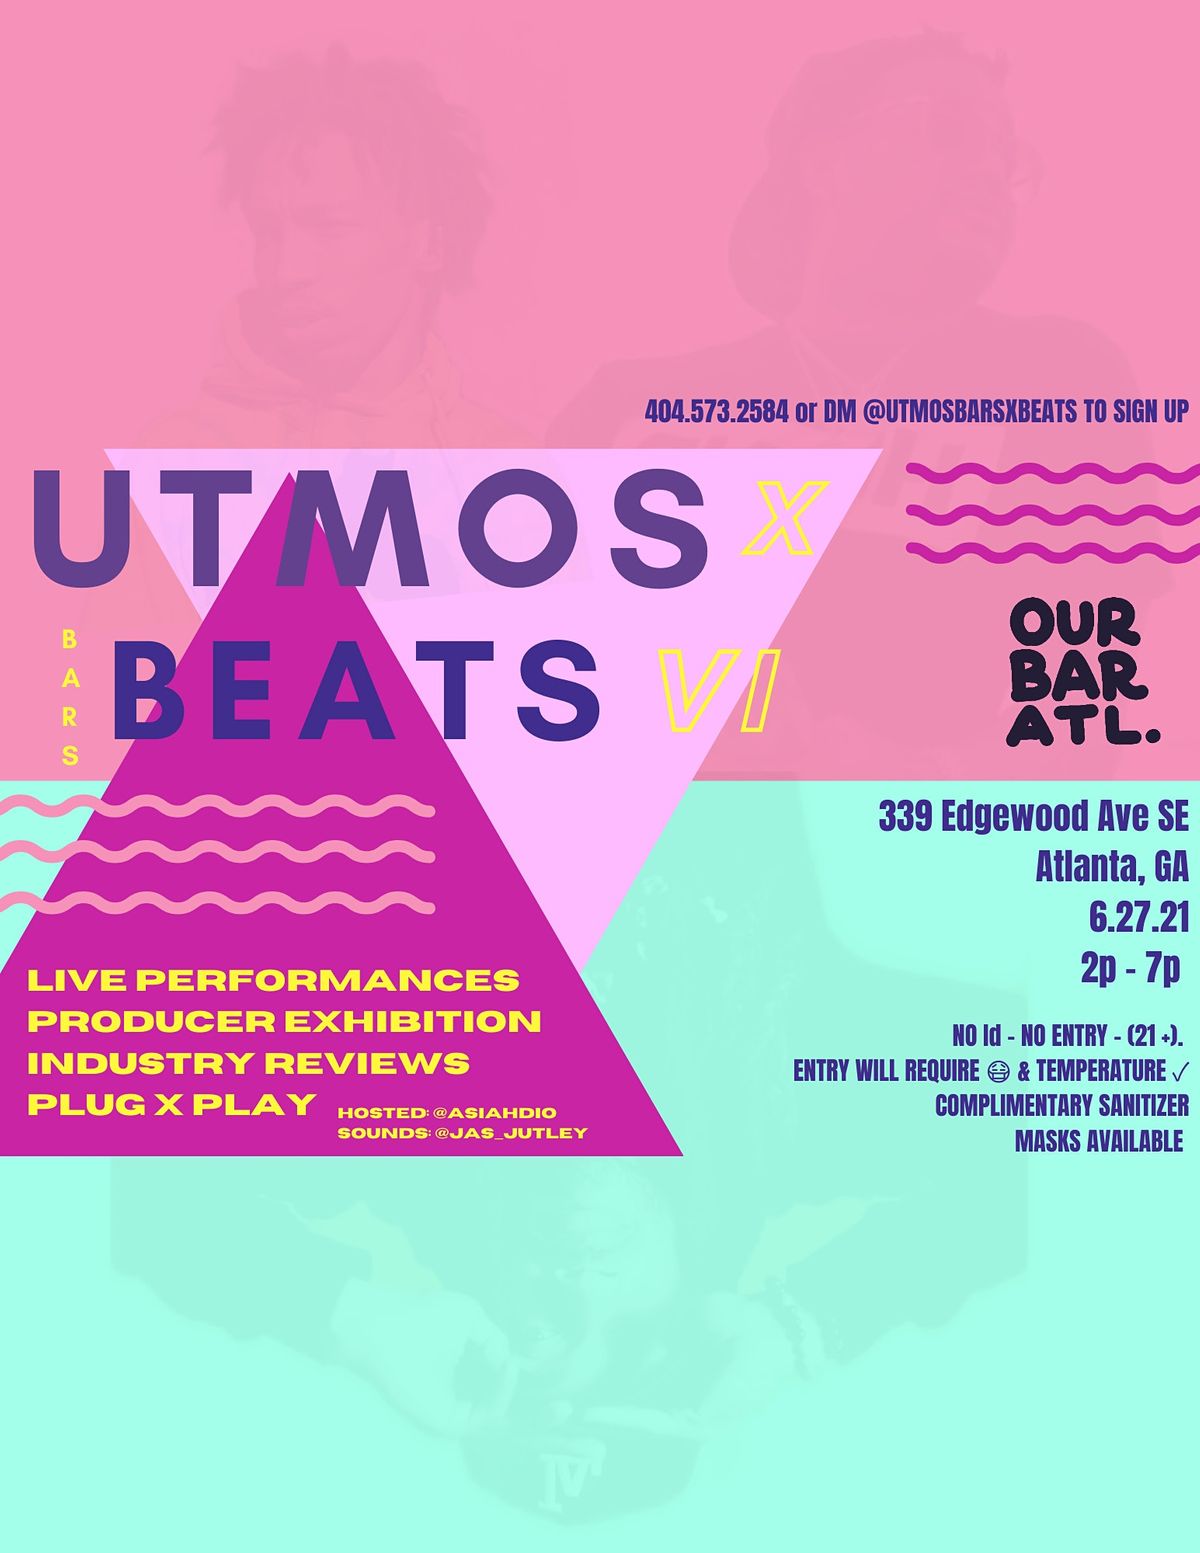 Utmos Bars X Beats VI @OurBarAtl